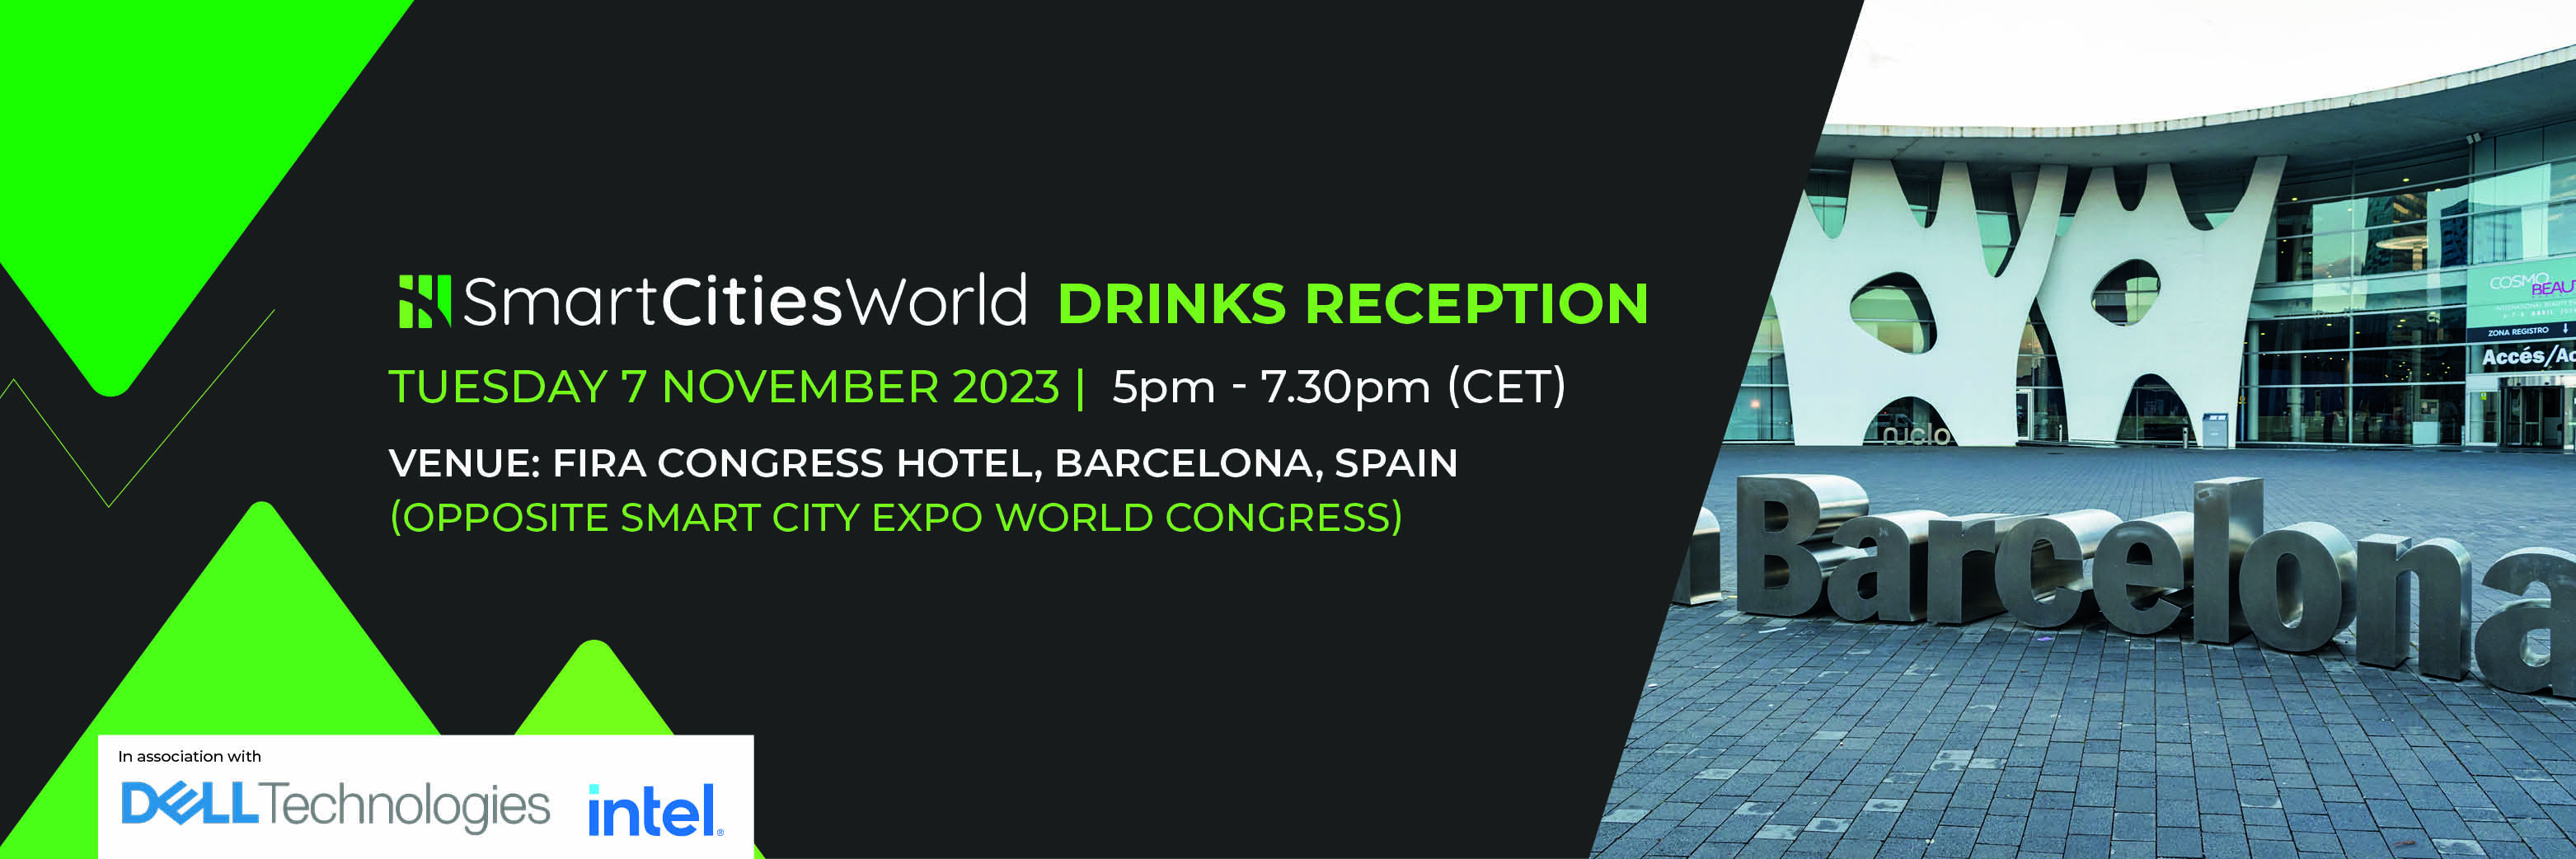 SmartCitiesWorld Drinks Reception - 7 November 2023